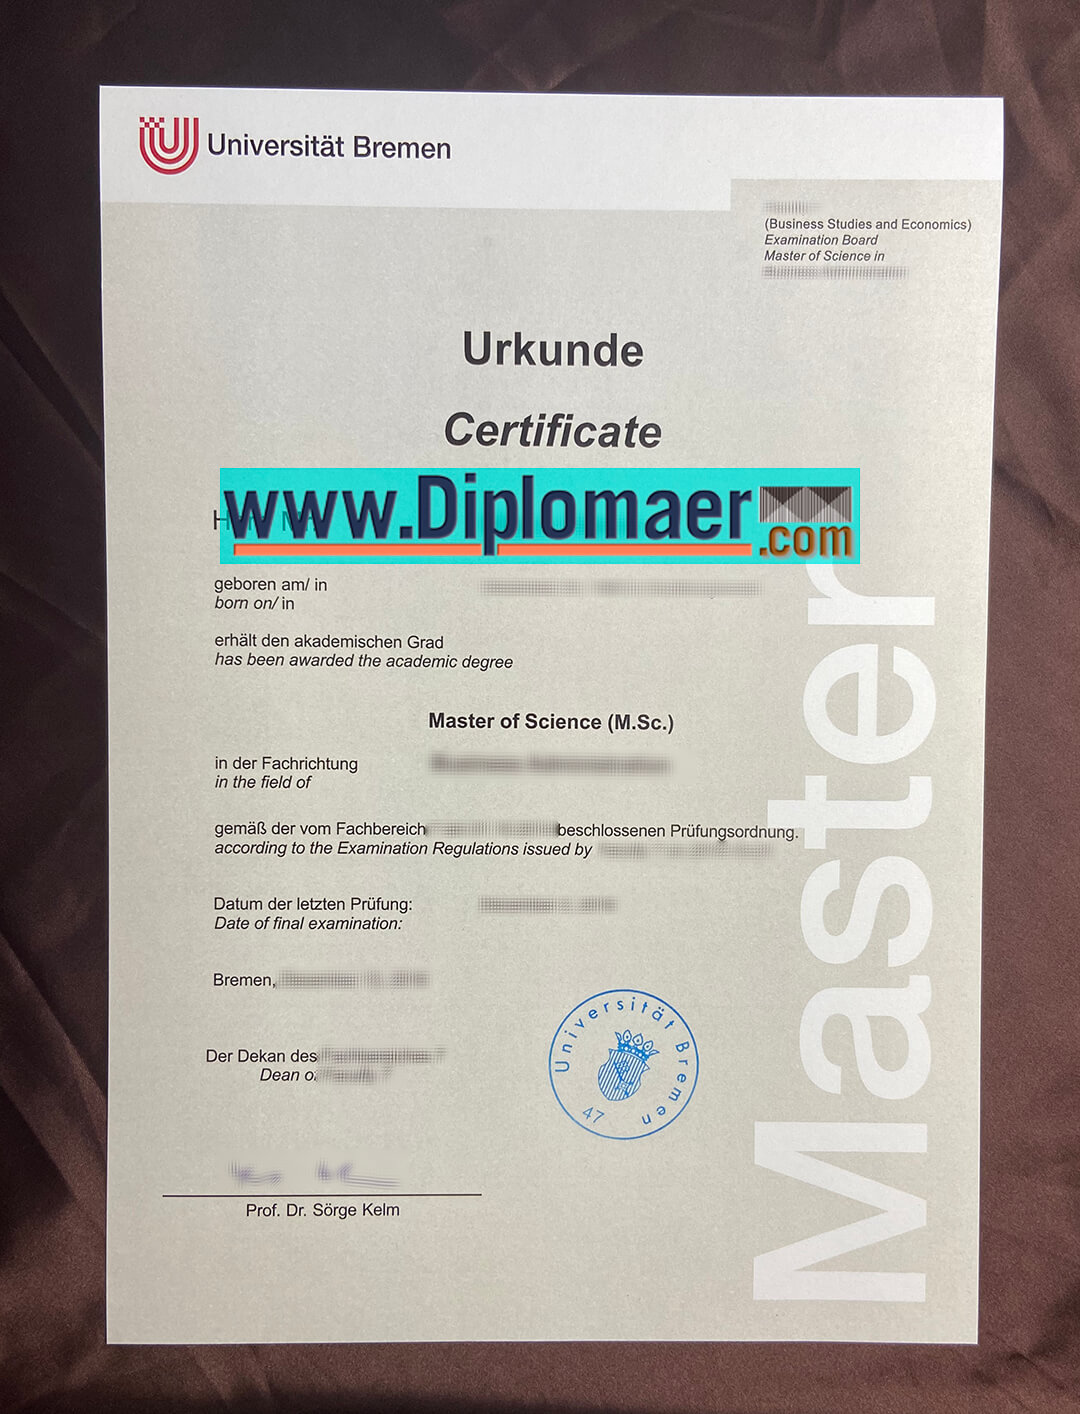 Universitat Bremen Fake Diploma - Which website provides University of Bremen Master of Science degree certificate?